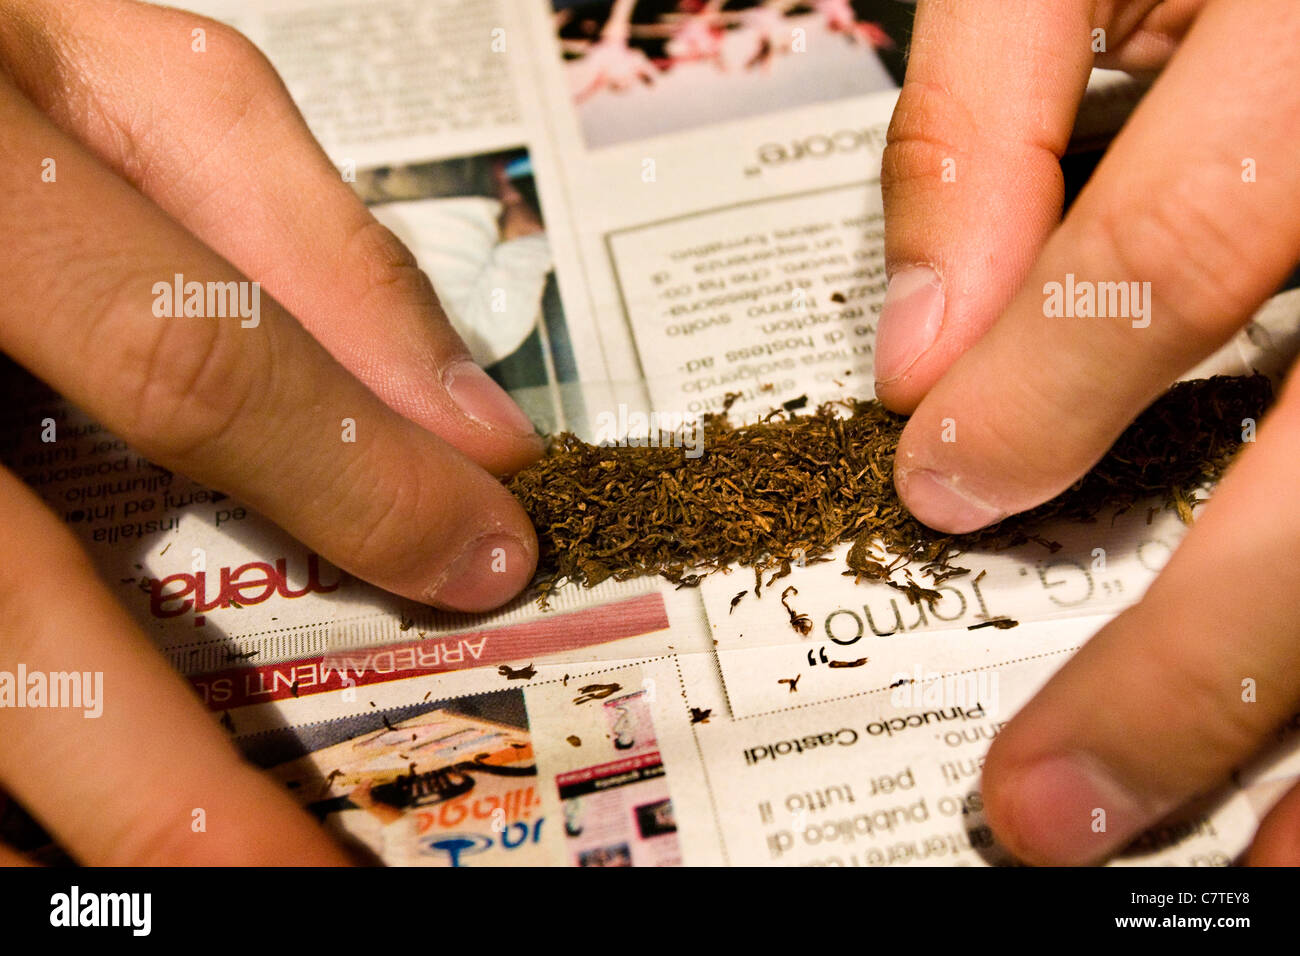 Young man's hands rolling marijuana joint, close up Stock Photo